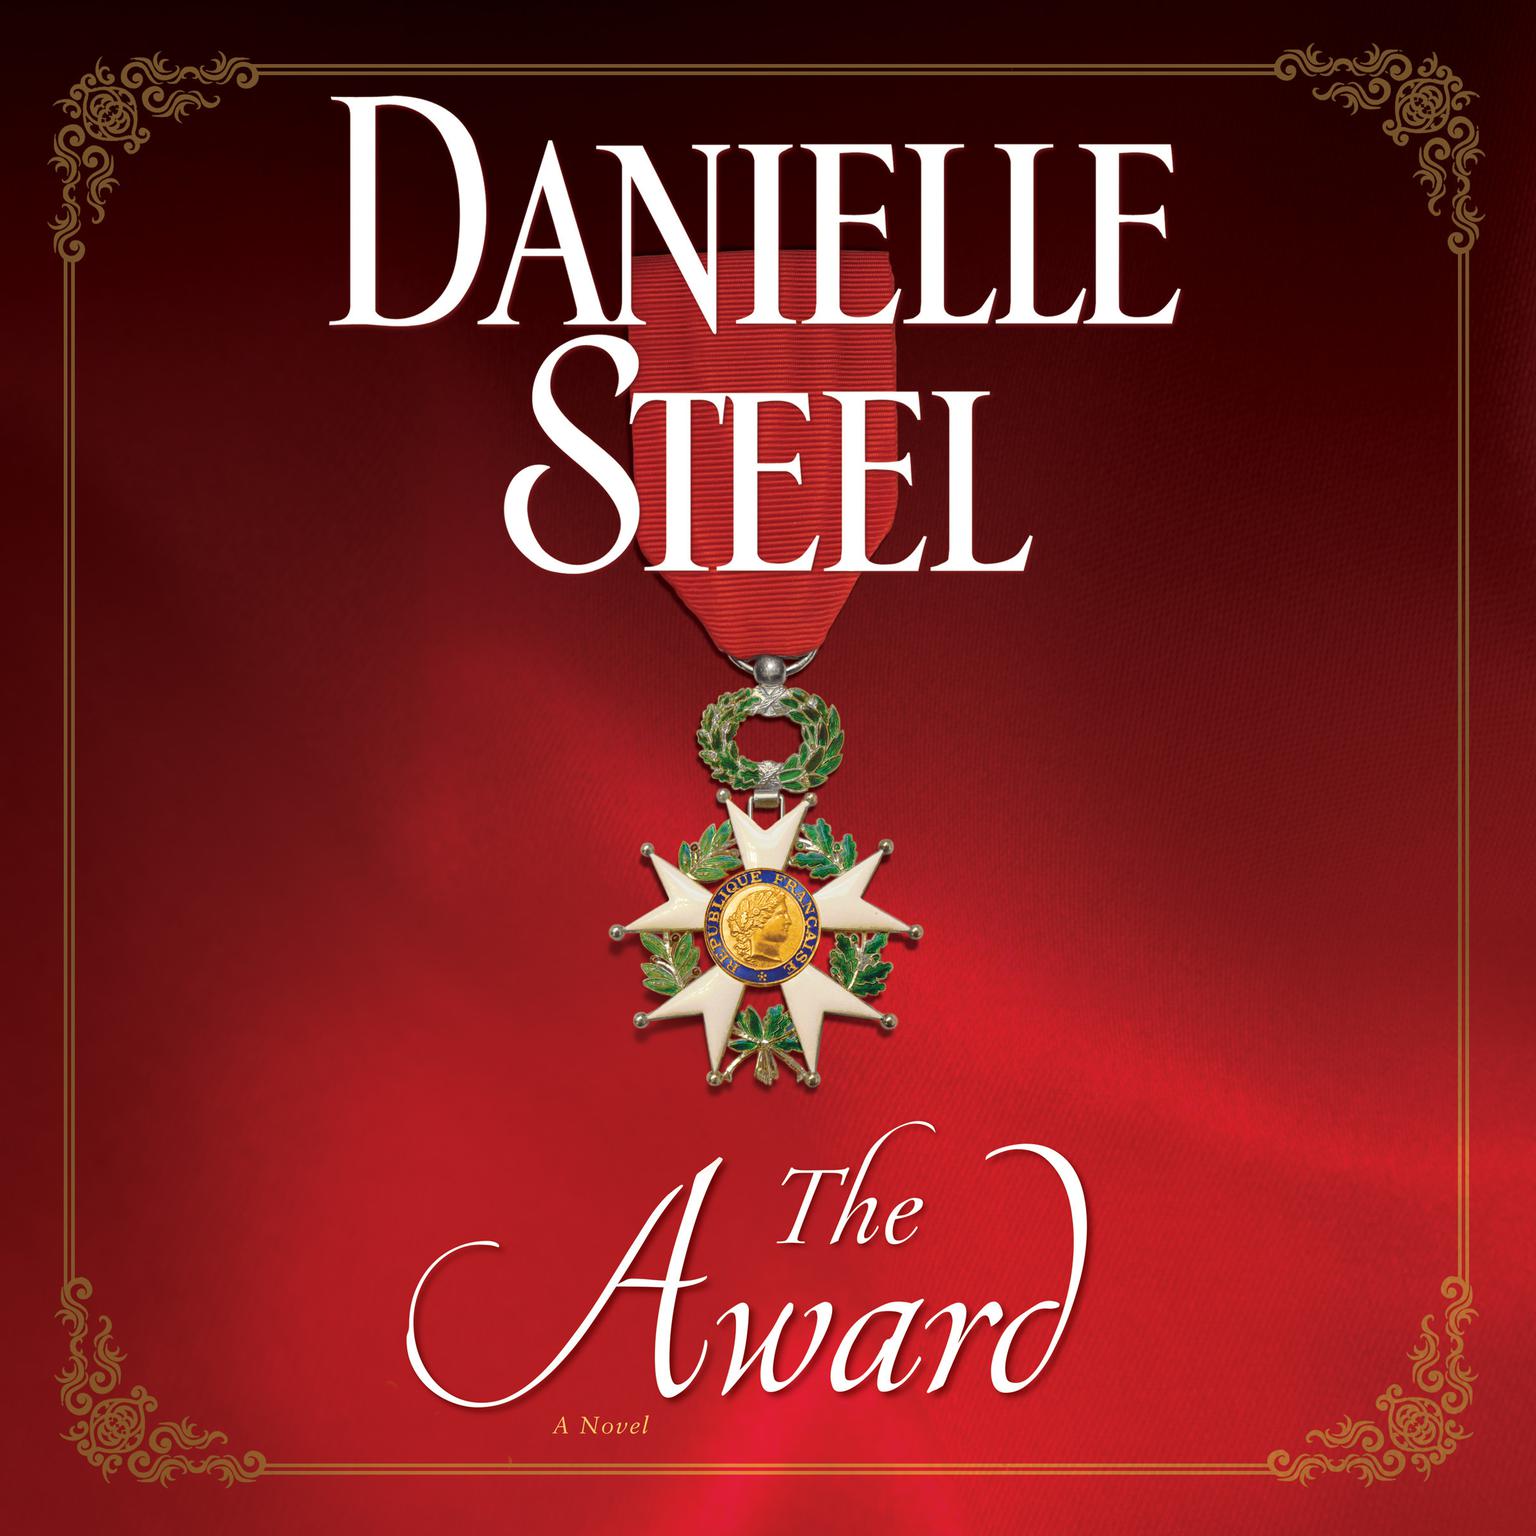 The Award: A Novel Audiobook, by Danielle Steel